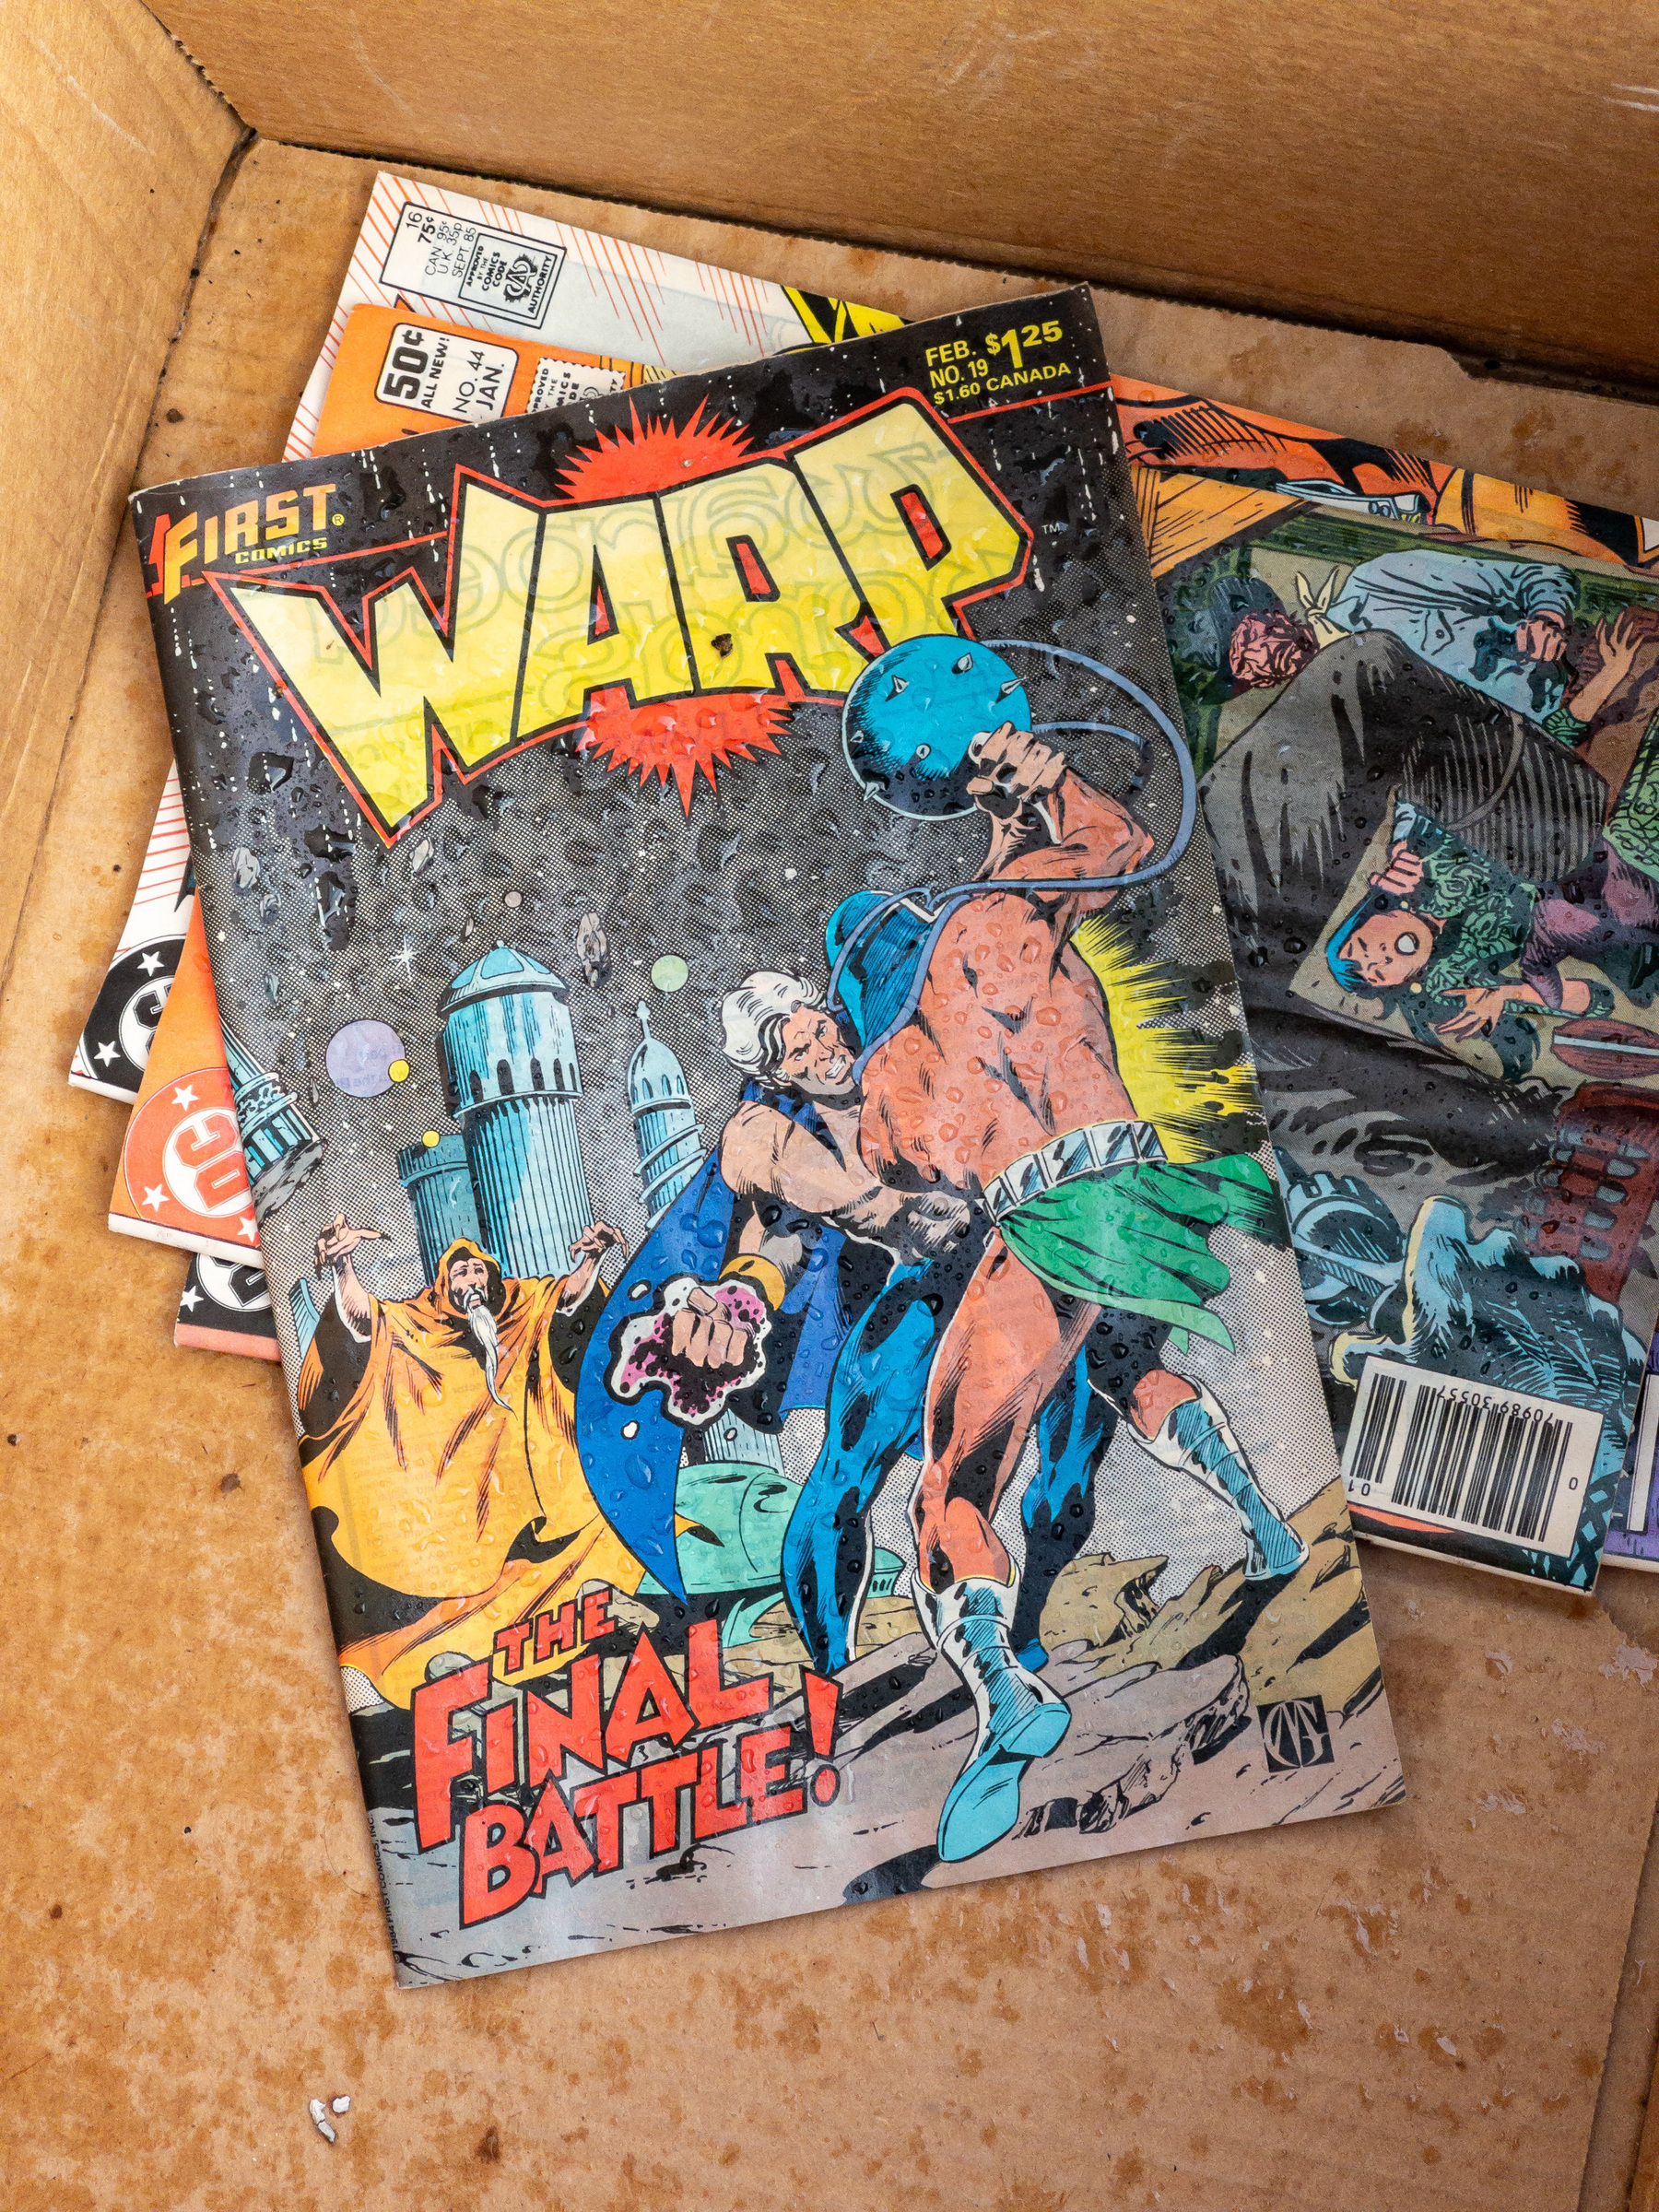 First warp comic book in a brown cardboard box.